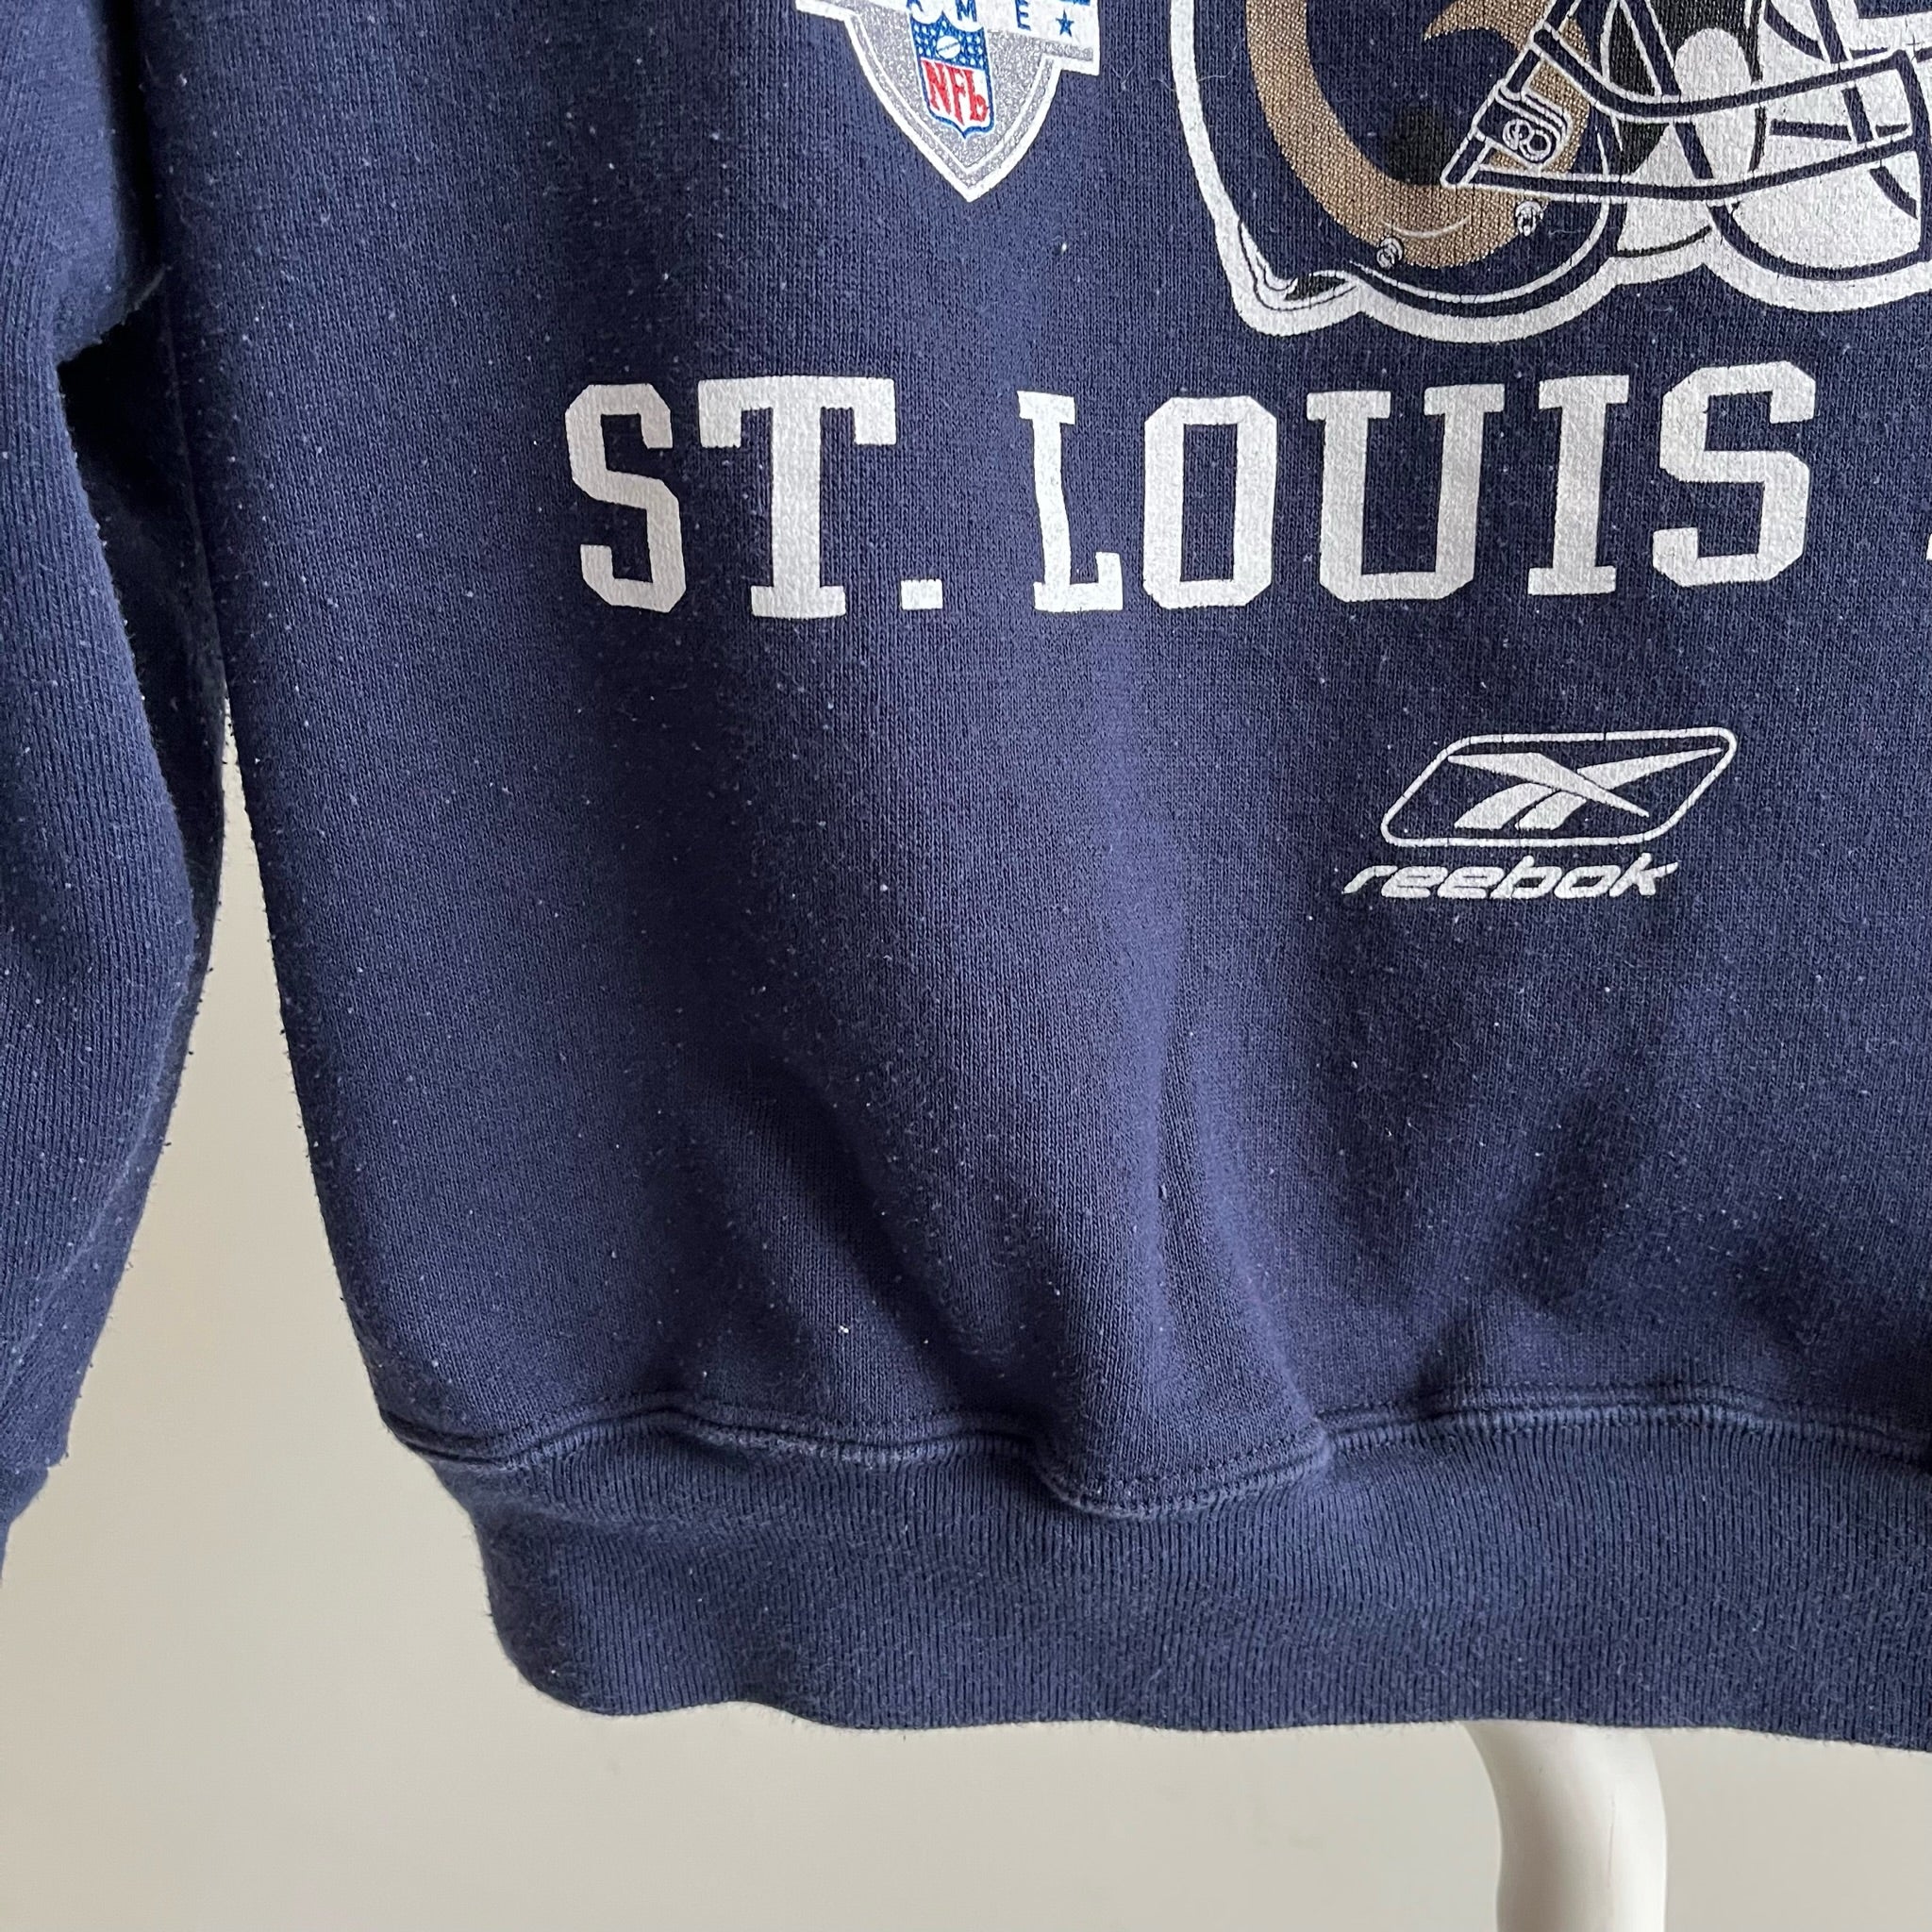 2001 NFC Champs - St. Louis Rams (maintenant Los Angeles Rams BTW) - Sweat-shirt